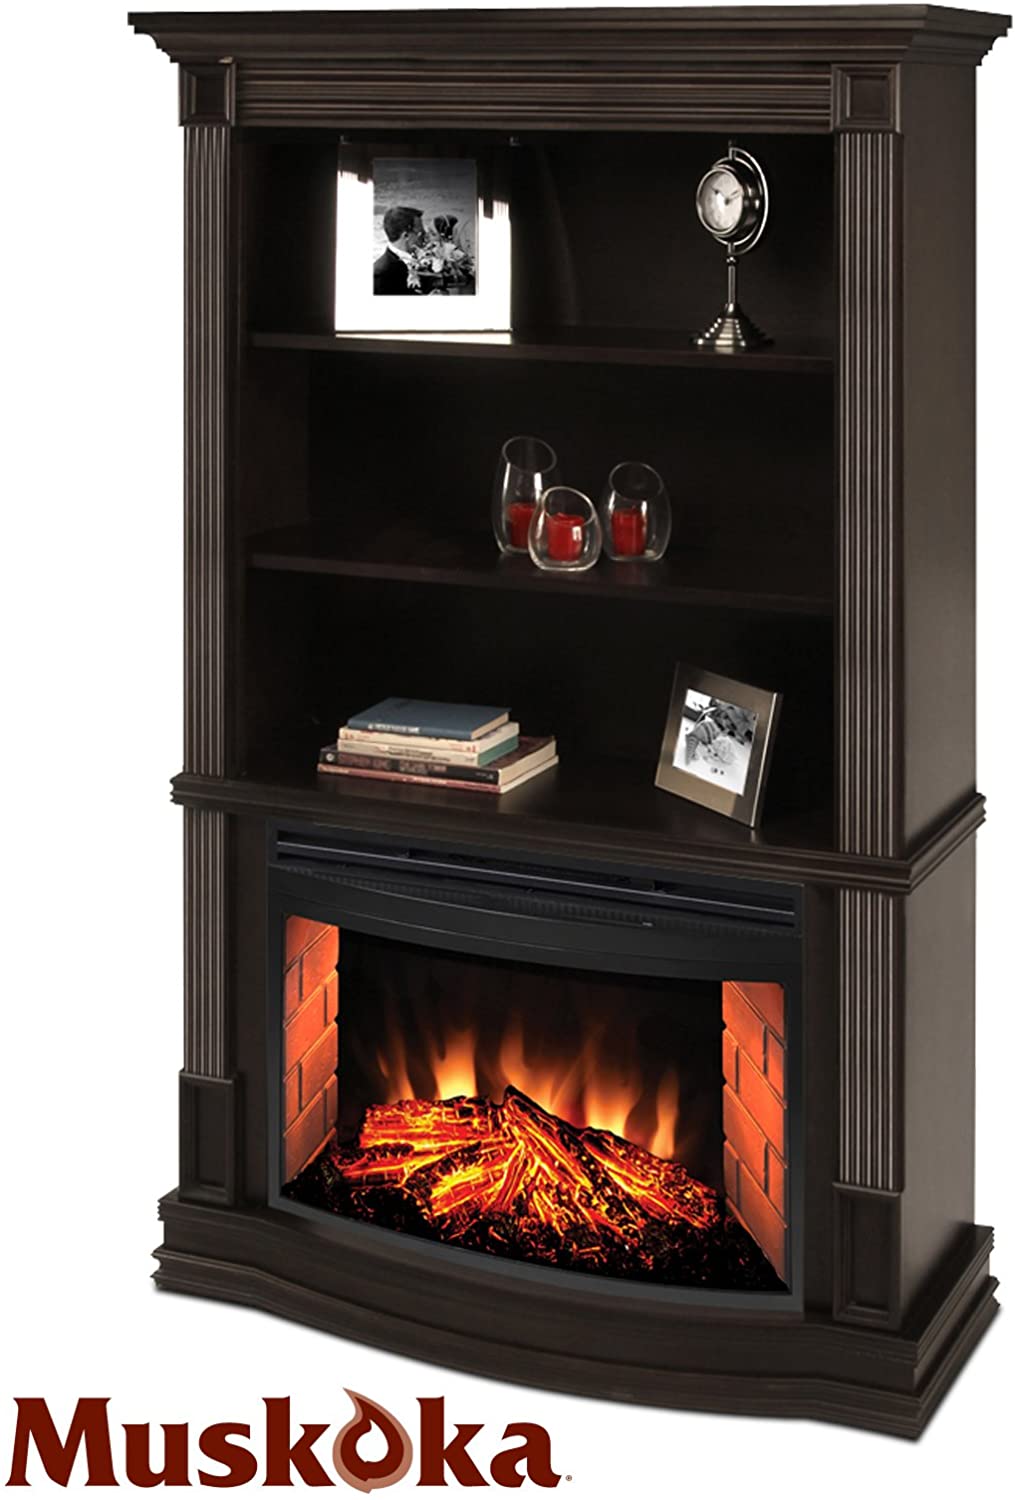 Electric Fireplace with Bookcase Fresh Muskoka Picton Electric Fireplace with Curved Firebox and